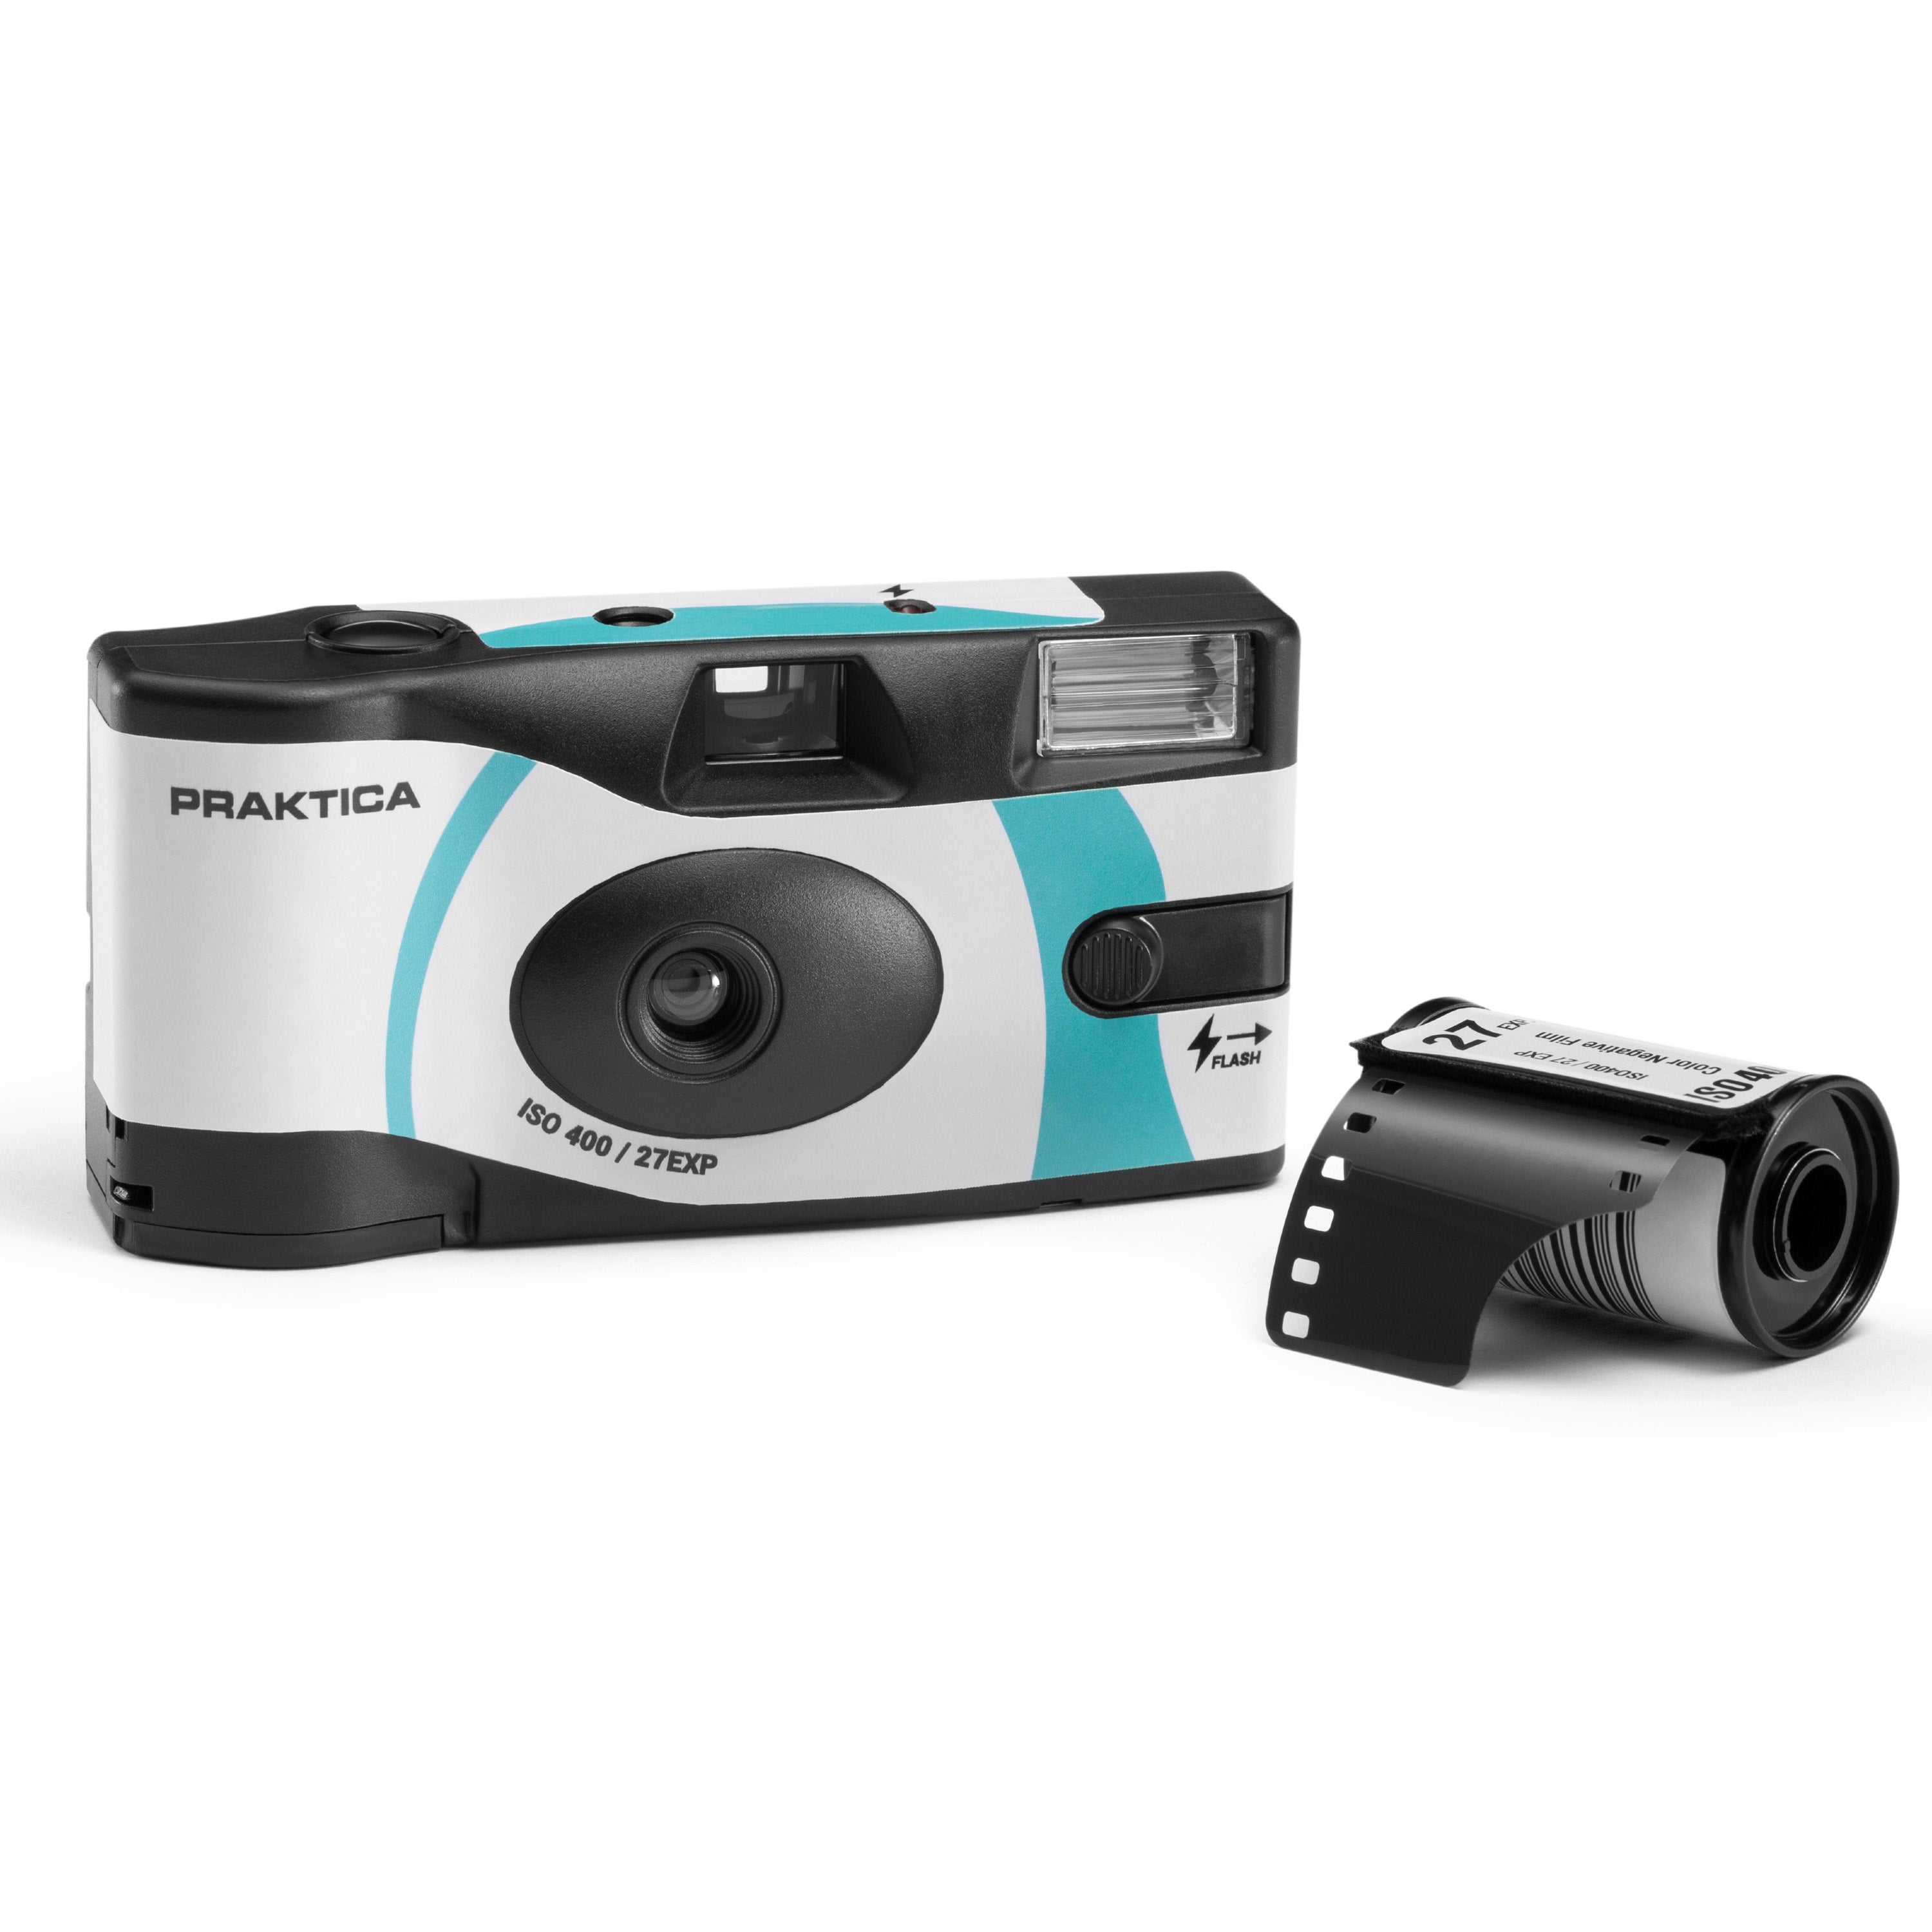 PRAKTICA Luxmedia 35mm Disposable Film Camera with Flash & 27 Exposure ISO400 Film - maplin.co.uk